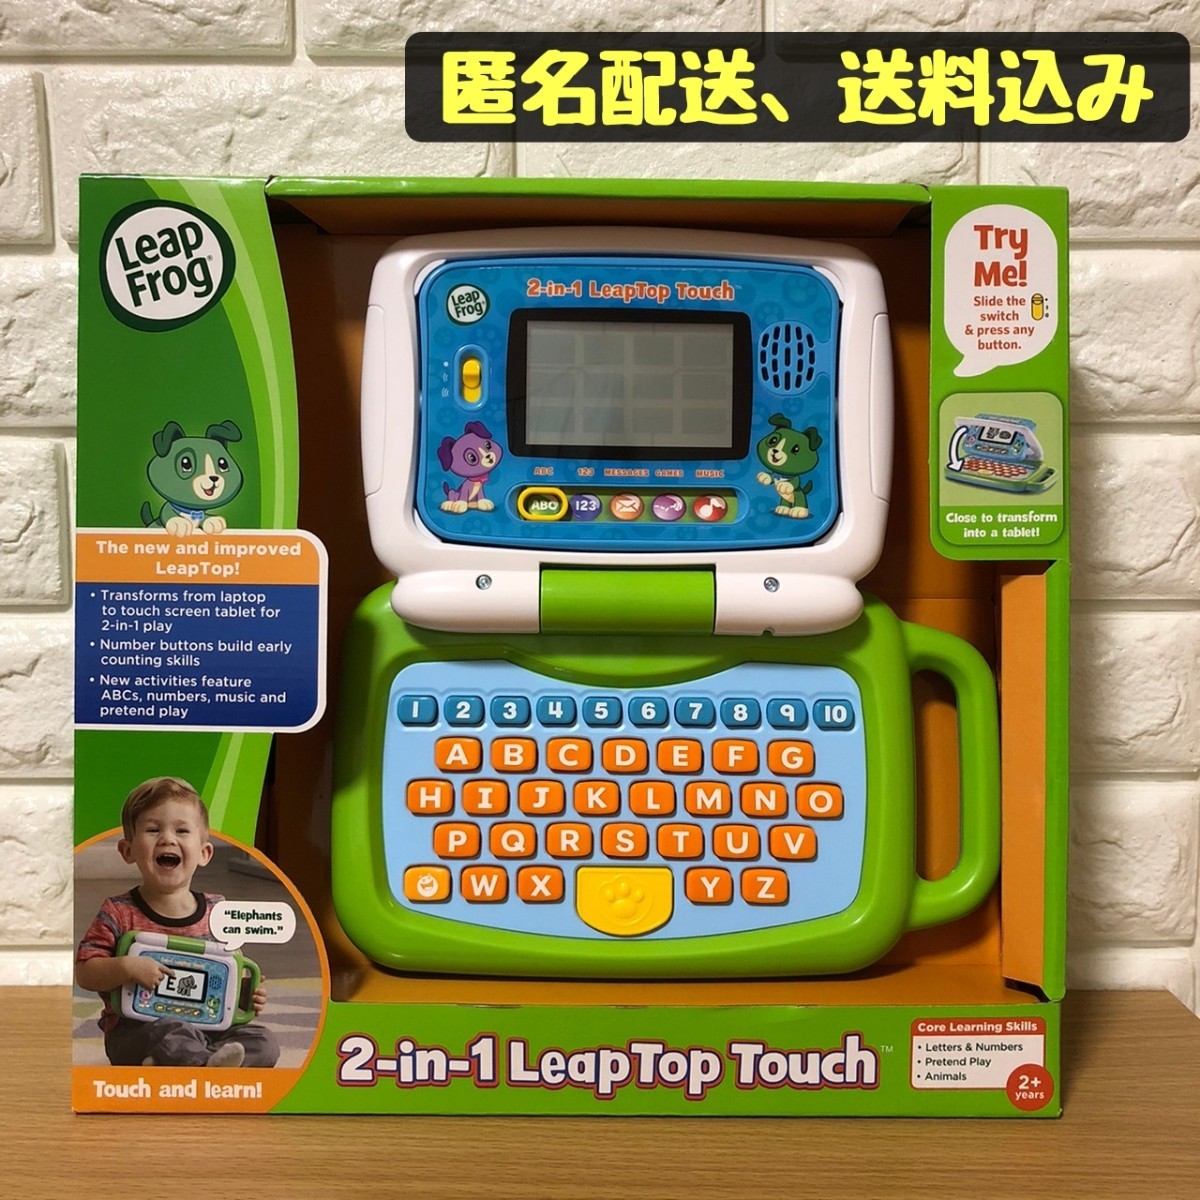 Paypayフリマ 新品 リープフロッグ 英語学習 パソコン Leapfrog Leap Laptop Touch 子供用 ノートpc